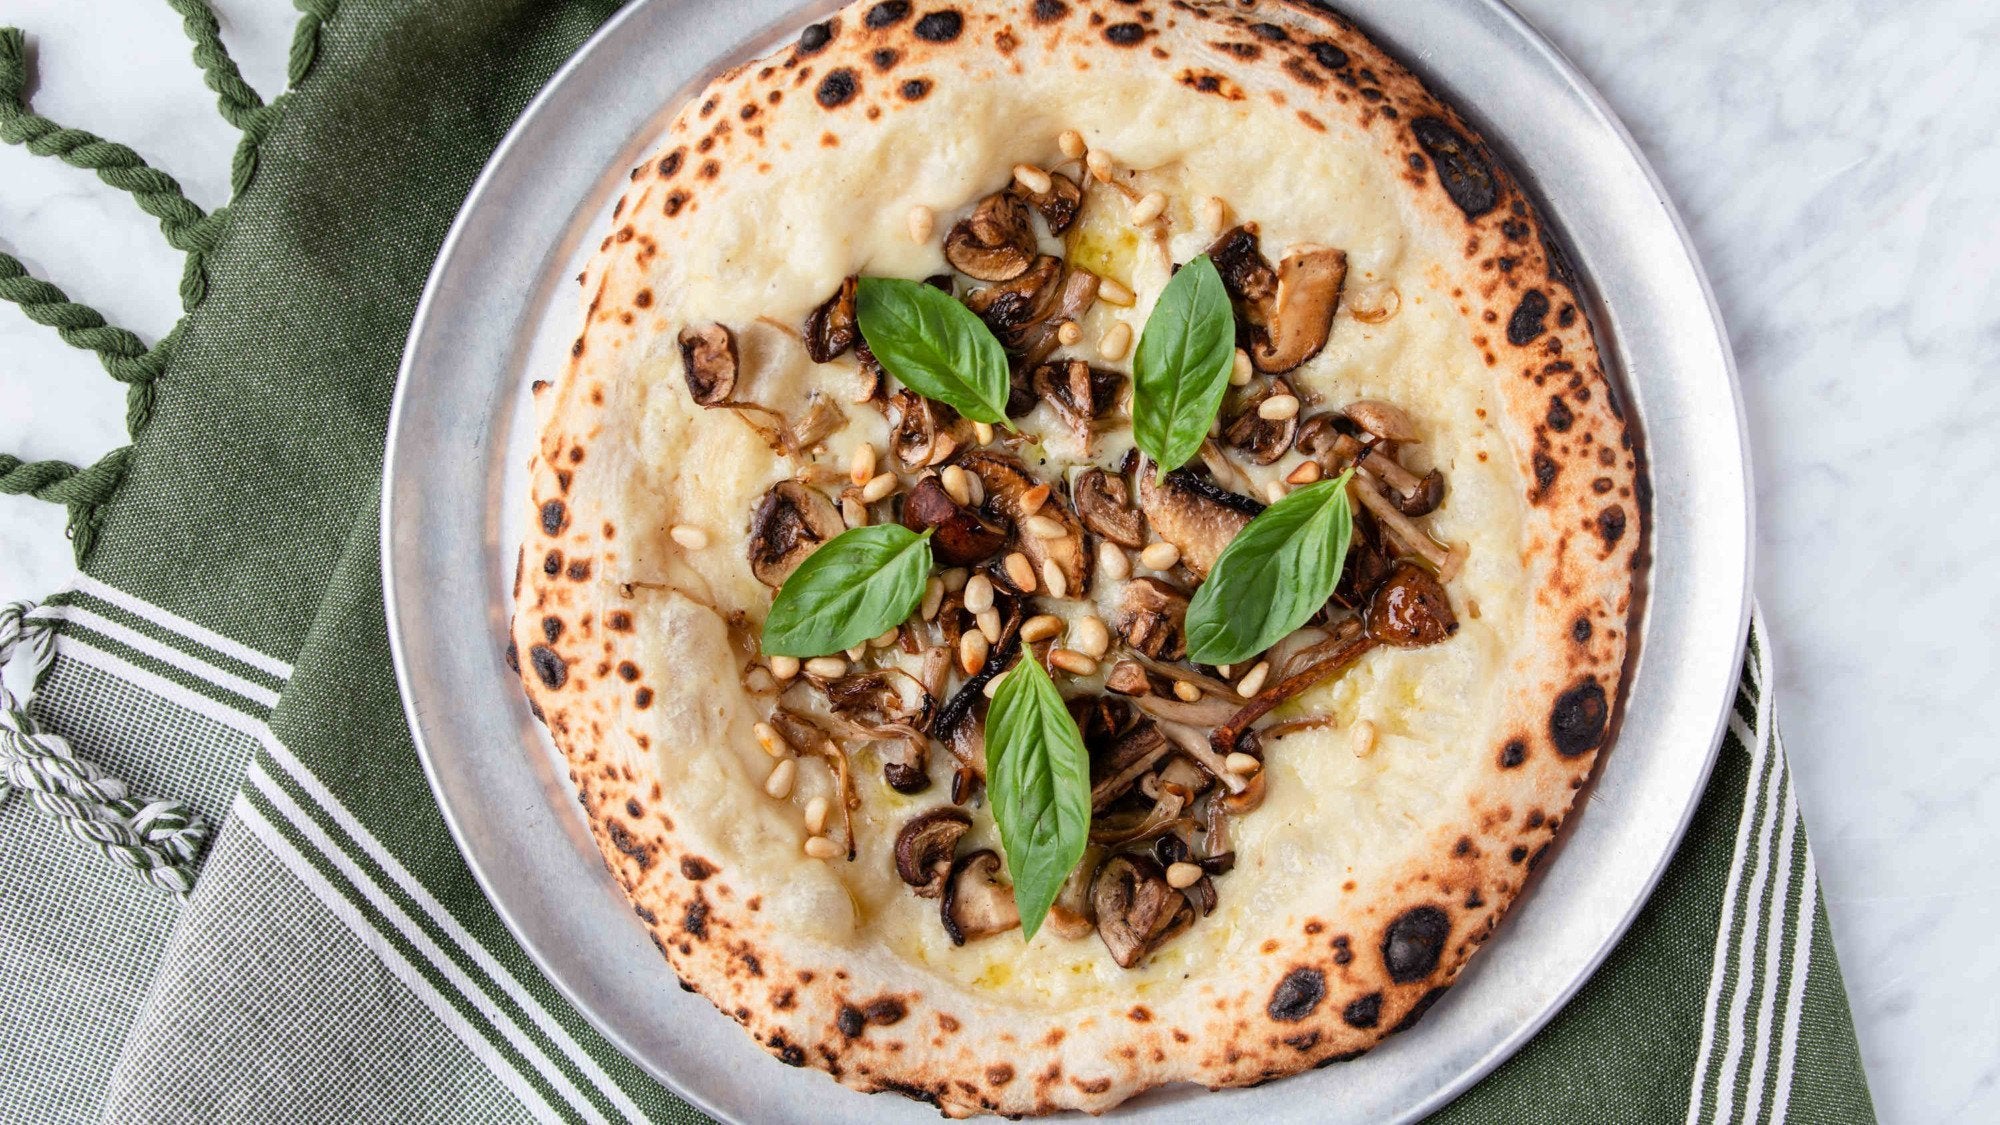 Jerusulam Artichoke, Wild Mushroom & Pine Nut Pizza